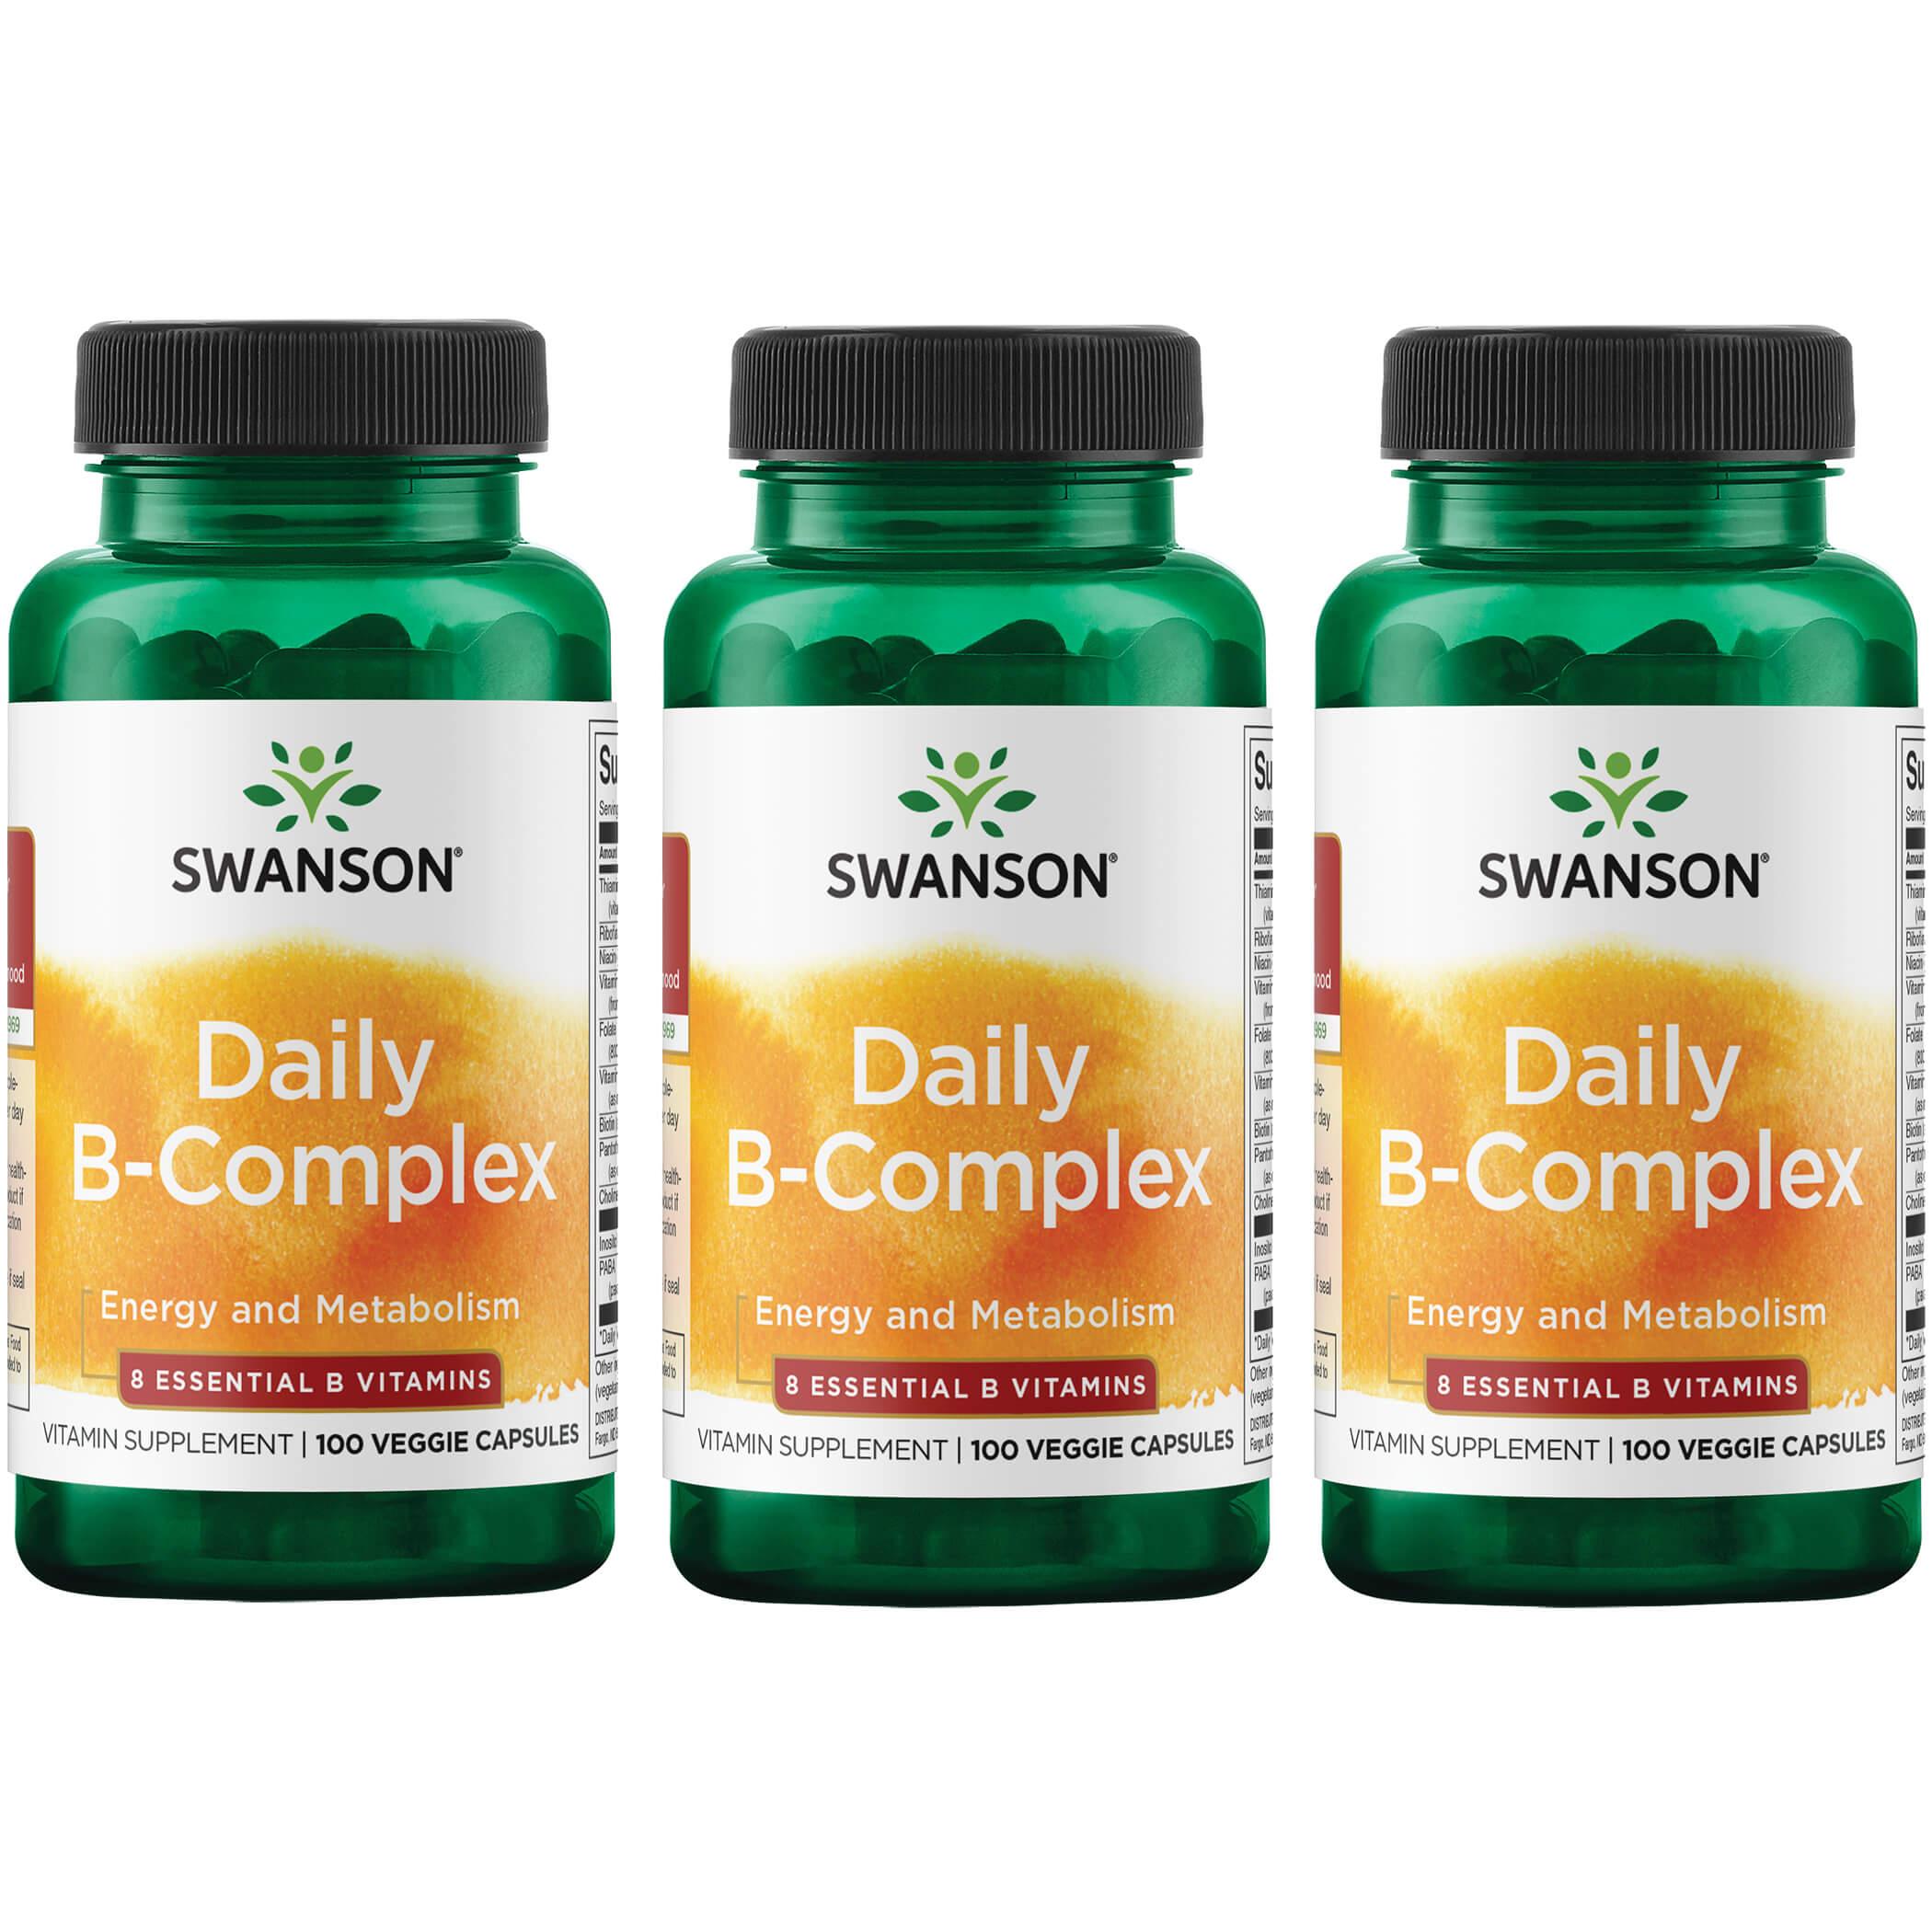 Swanson Premium Daily B-Complex 3 Pack Vitamin 100 Veg Caps Vitamin C